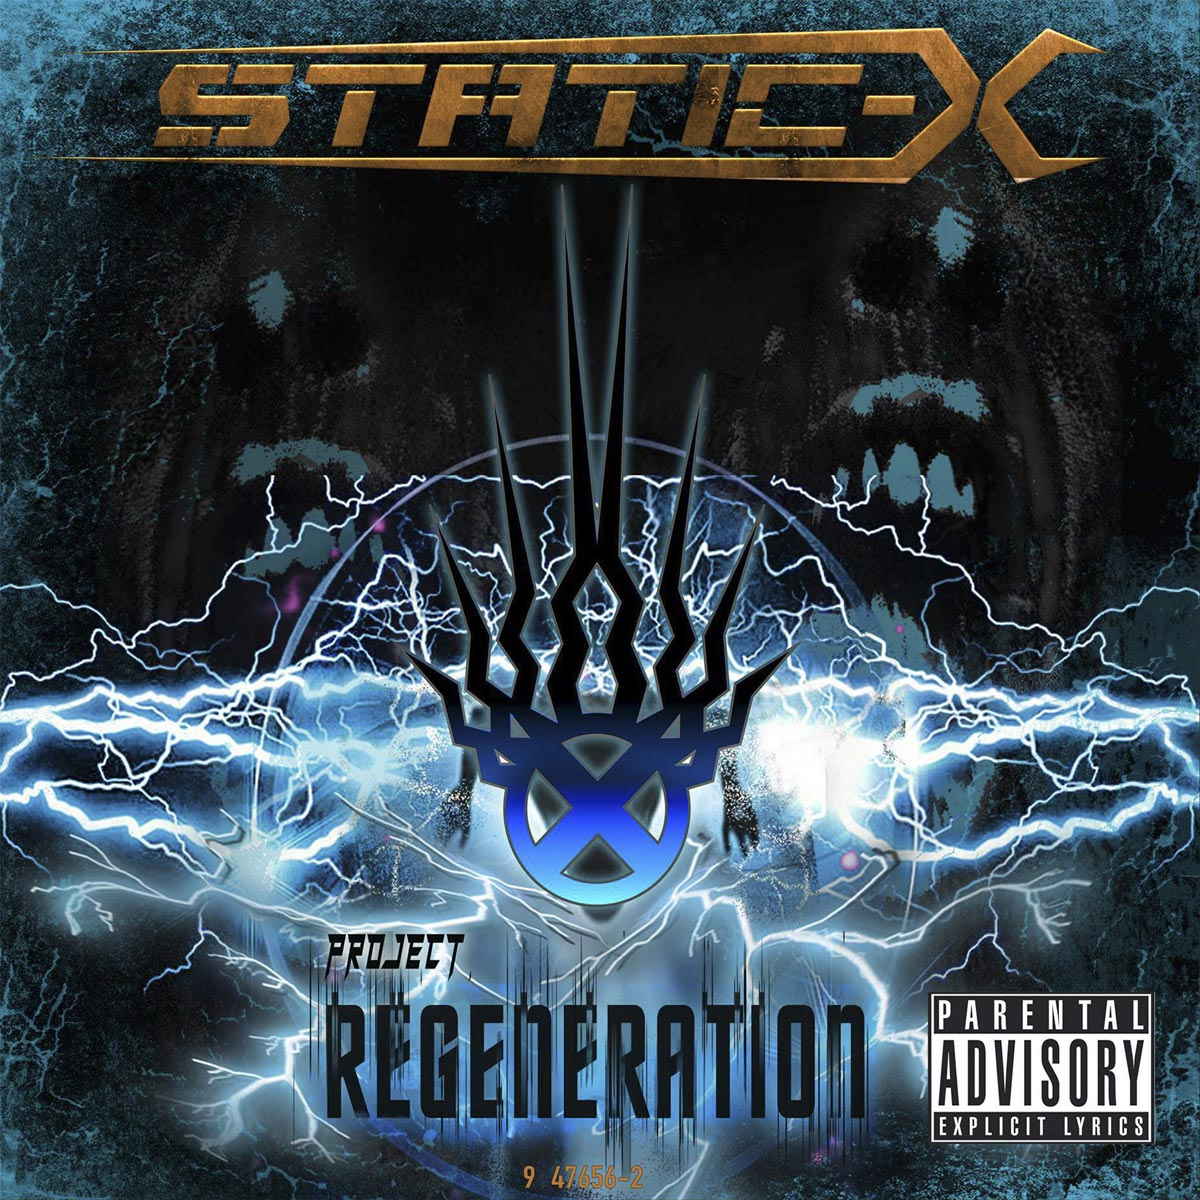 Static-X - Project Regeneration